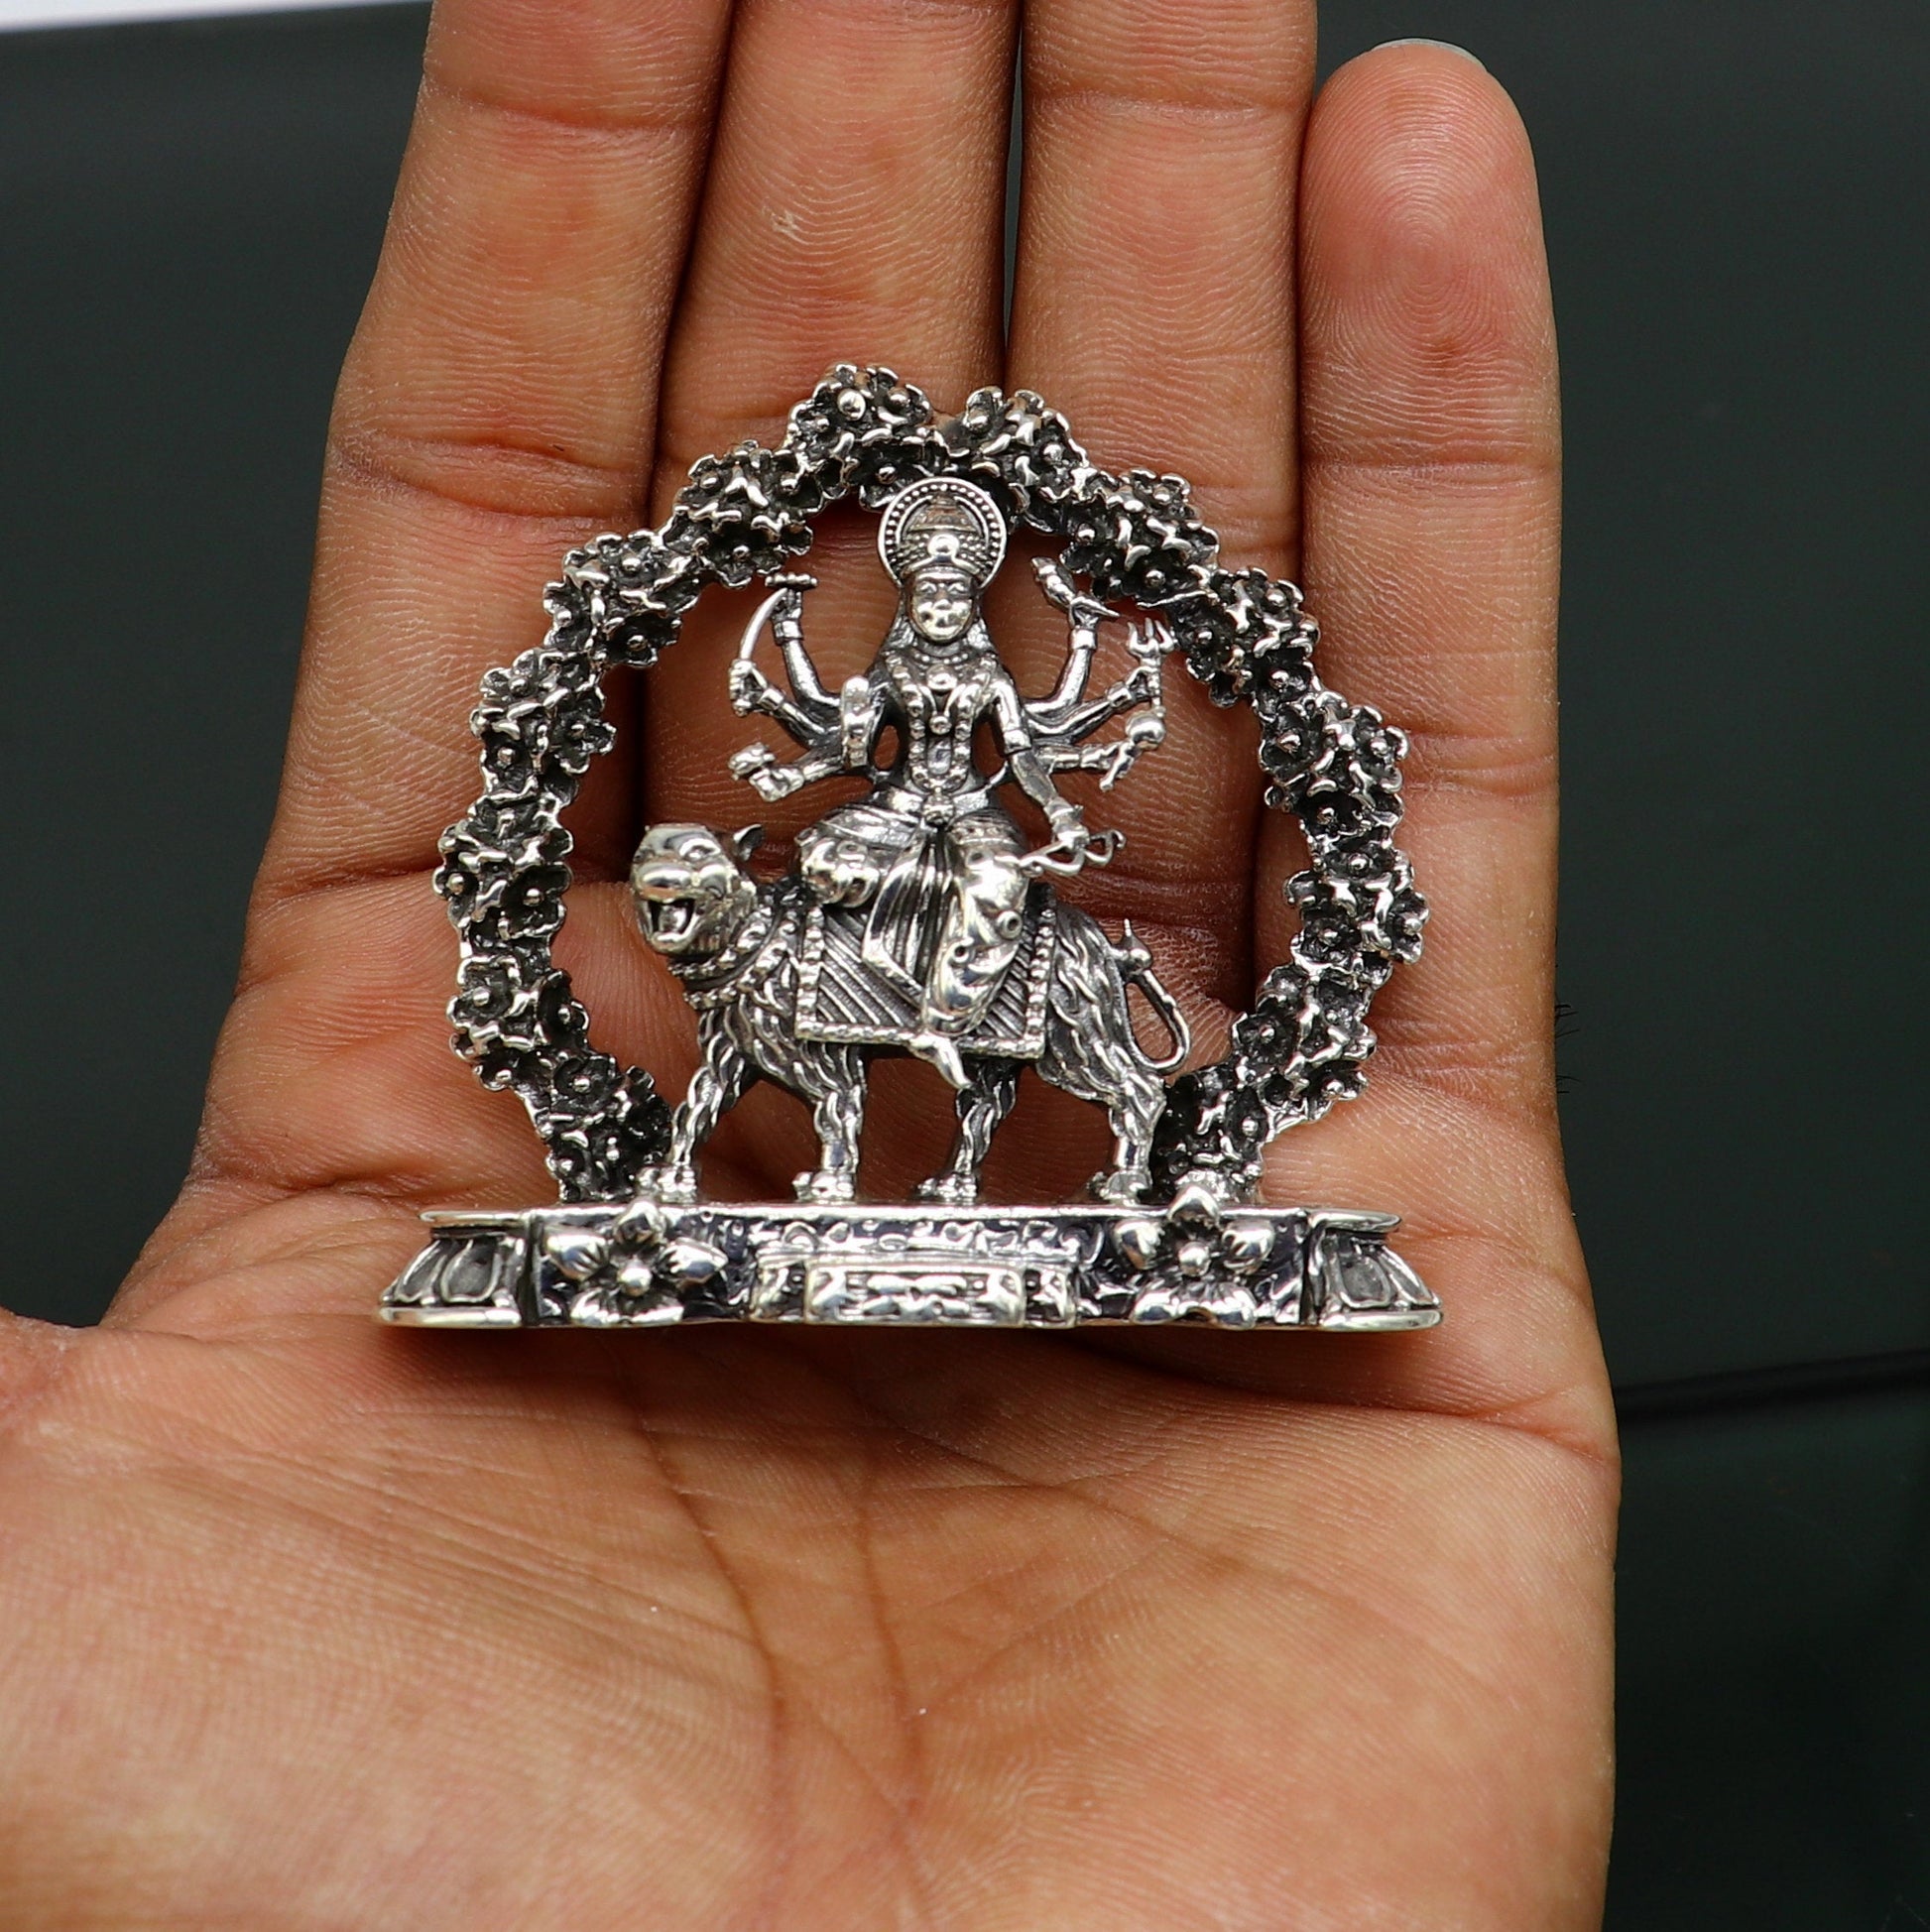 925 Sterling silver Goddess bhawani maa, Pooja Articles, Indian Silver Idols, handcrafted Mataji statue sculpture amazing gifting Art02 - TRIBAL ORNAMENTS